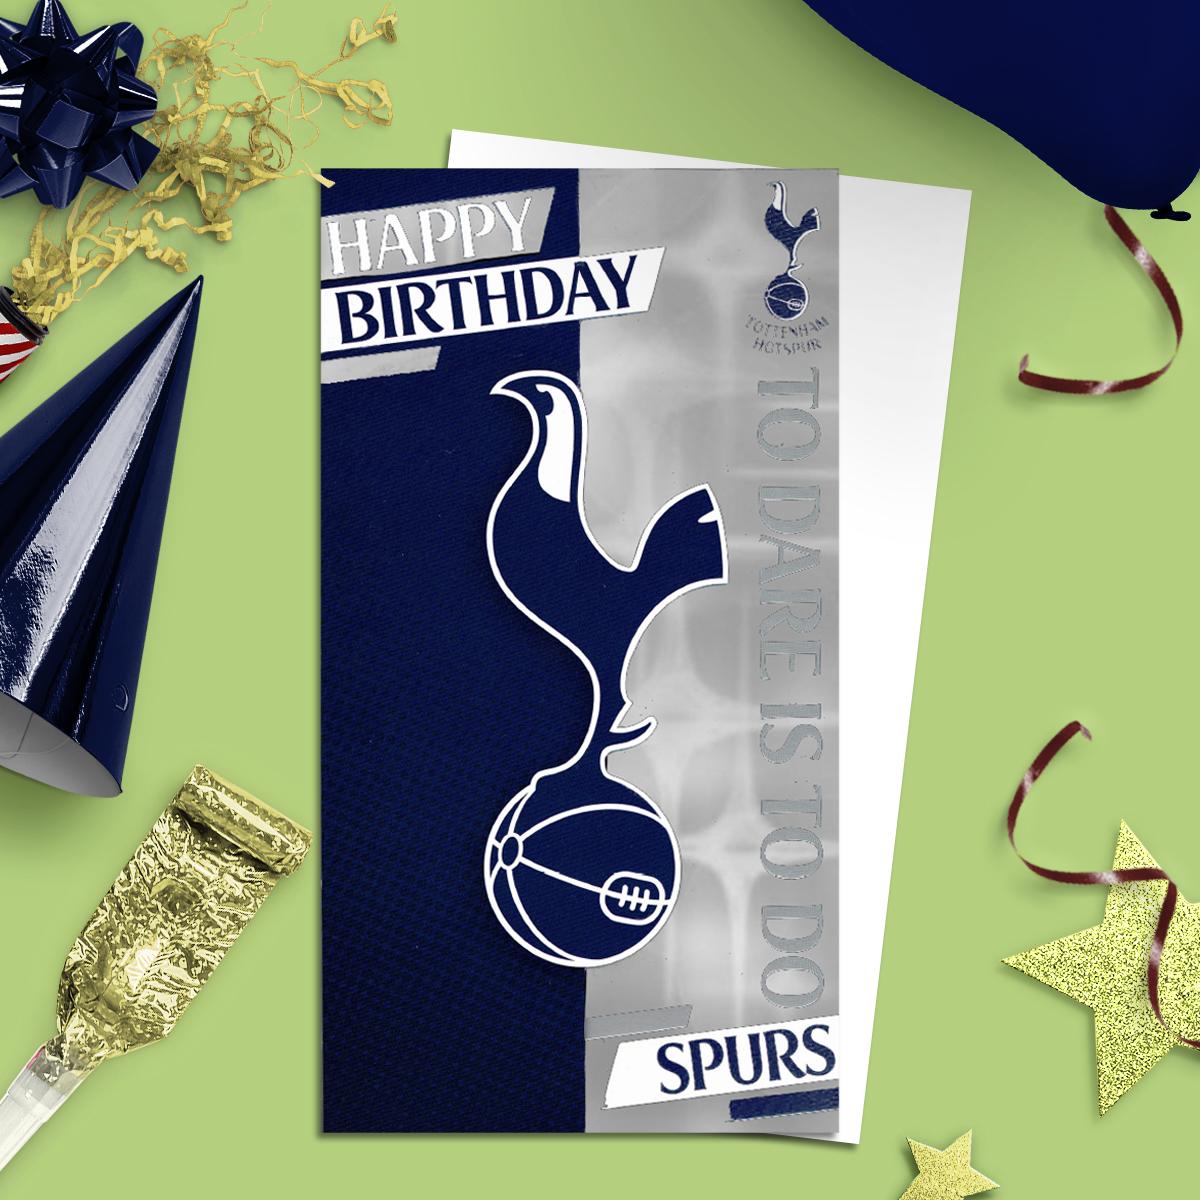 Tottenham Hotspur Football Club Birthday Card Alongside Its White Envelope